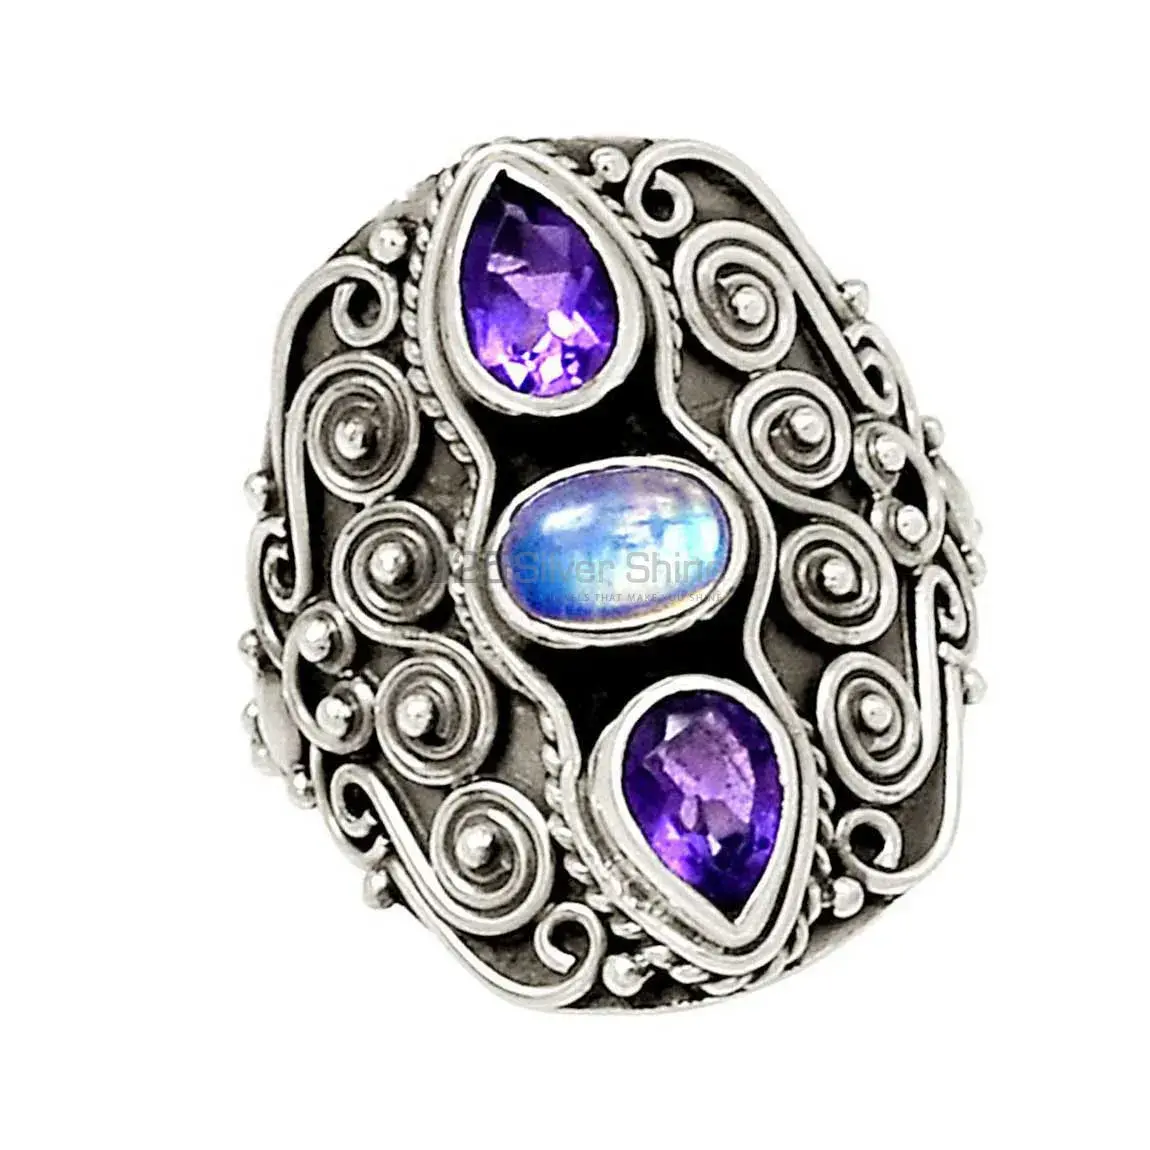 Unique Women's Silver Jewelry In Natural Stone Rings 925SR2230